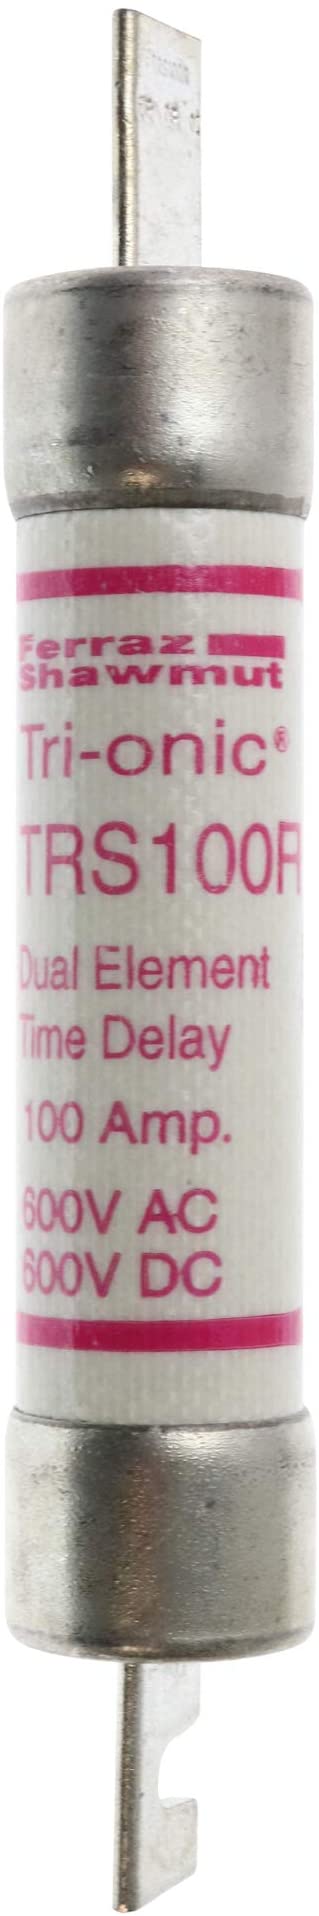 Mersen TRS100R Dual Element Midget Class RK5 Rejection Current-Limiting Time Delay Fuse 100 Amp 600 Volt AC/DC Tri-Onic, White